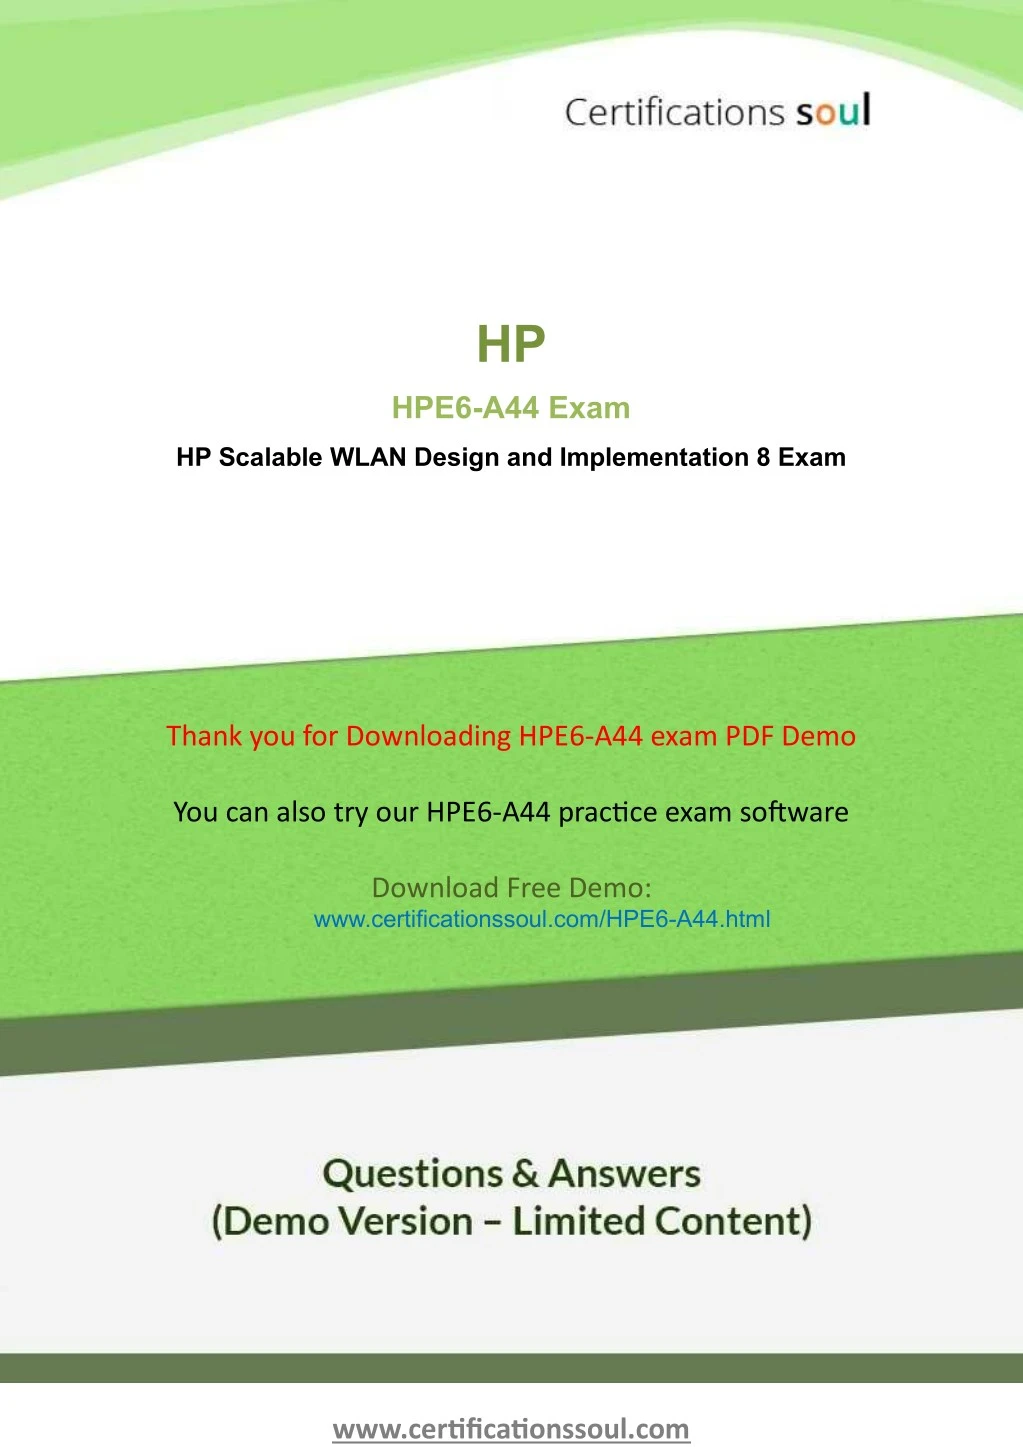 HPE6-A84 Prüfungs